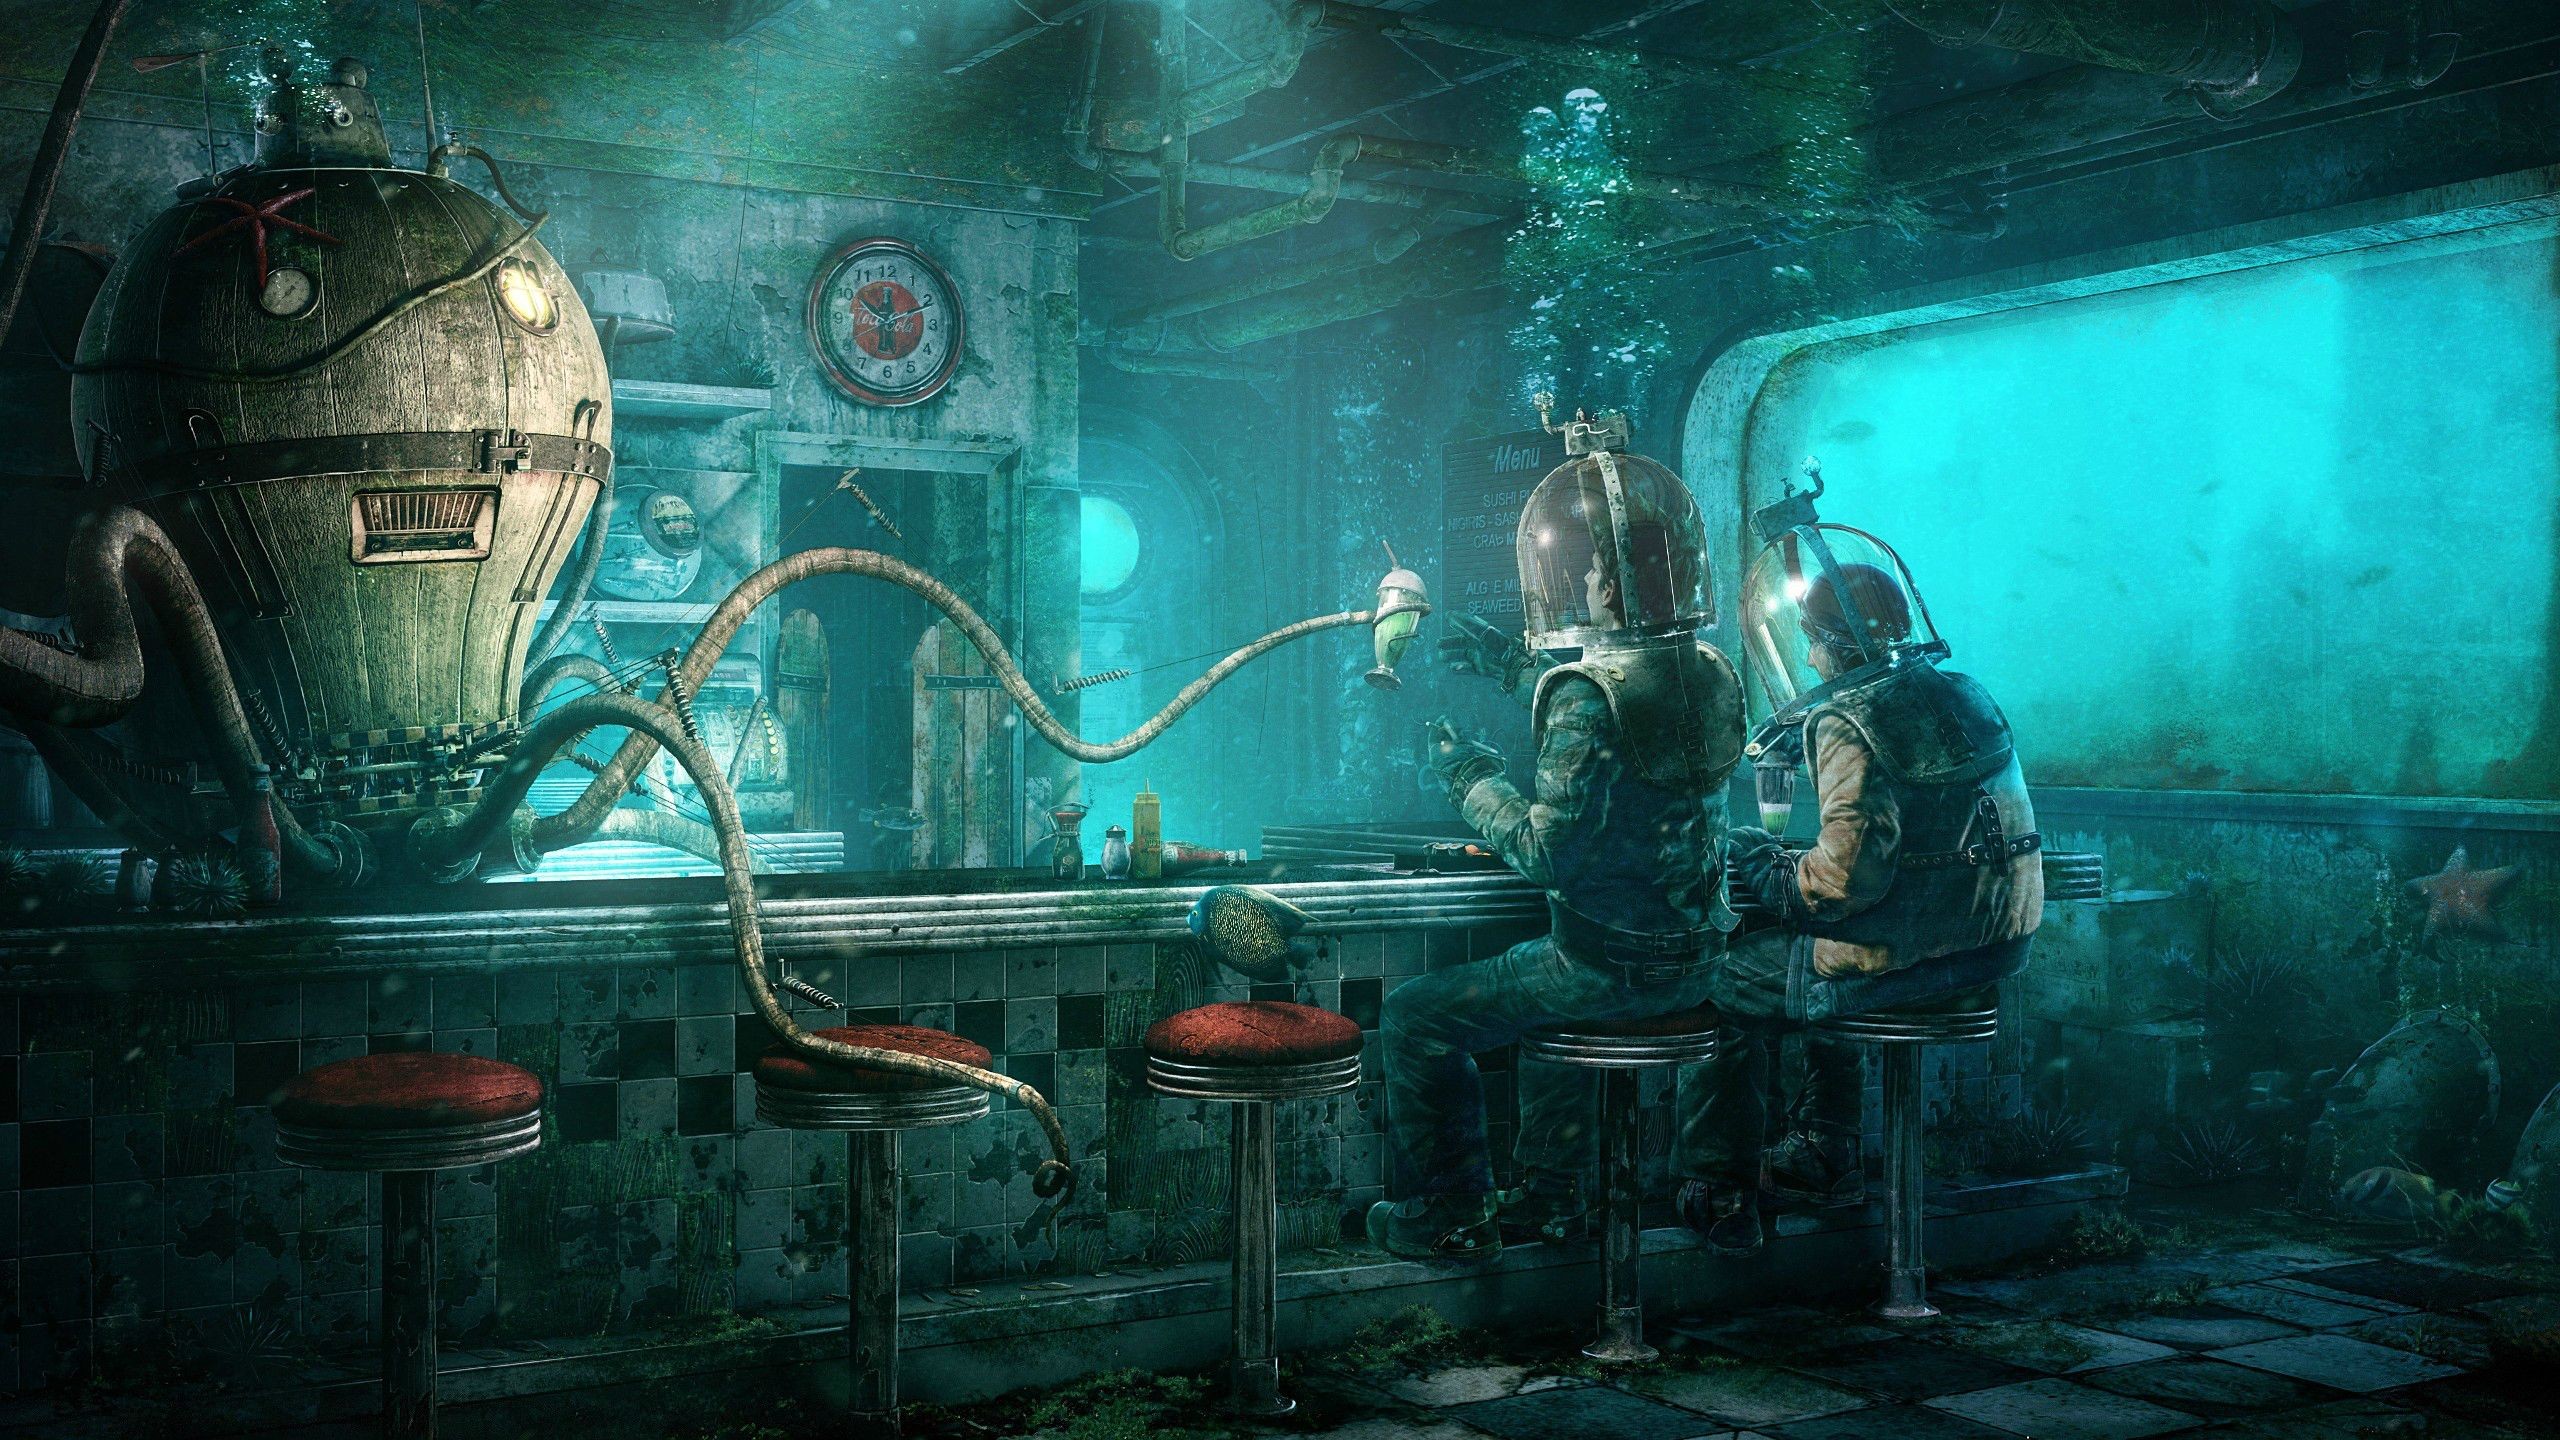 Artwork Fantasy Art Science Fiction Underwater Sea Blue Fictional Turquoise Diner Robot Divers Cyan  2560x1440